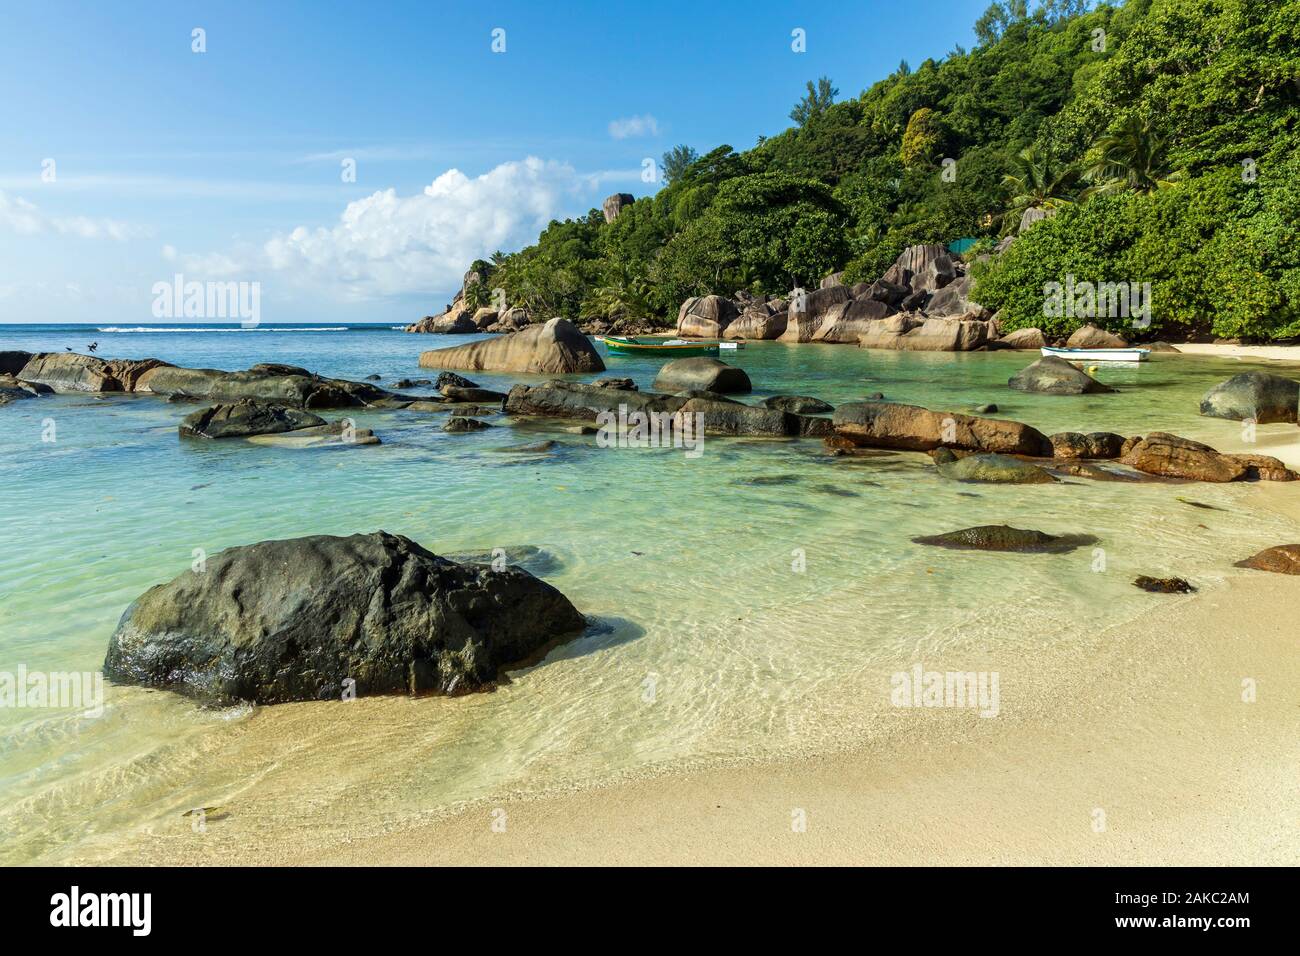 Seychelles, Mahe Island, fishing boats in Baie Lazare Stock Photo